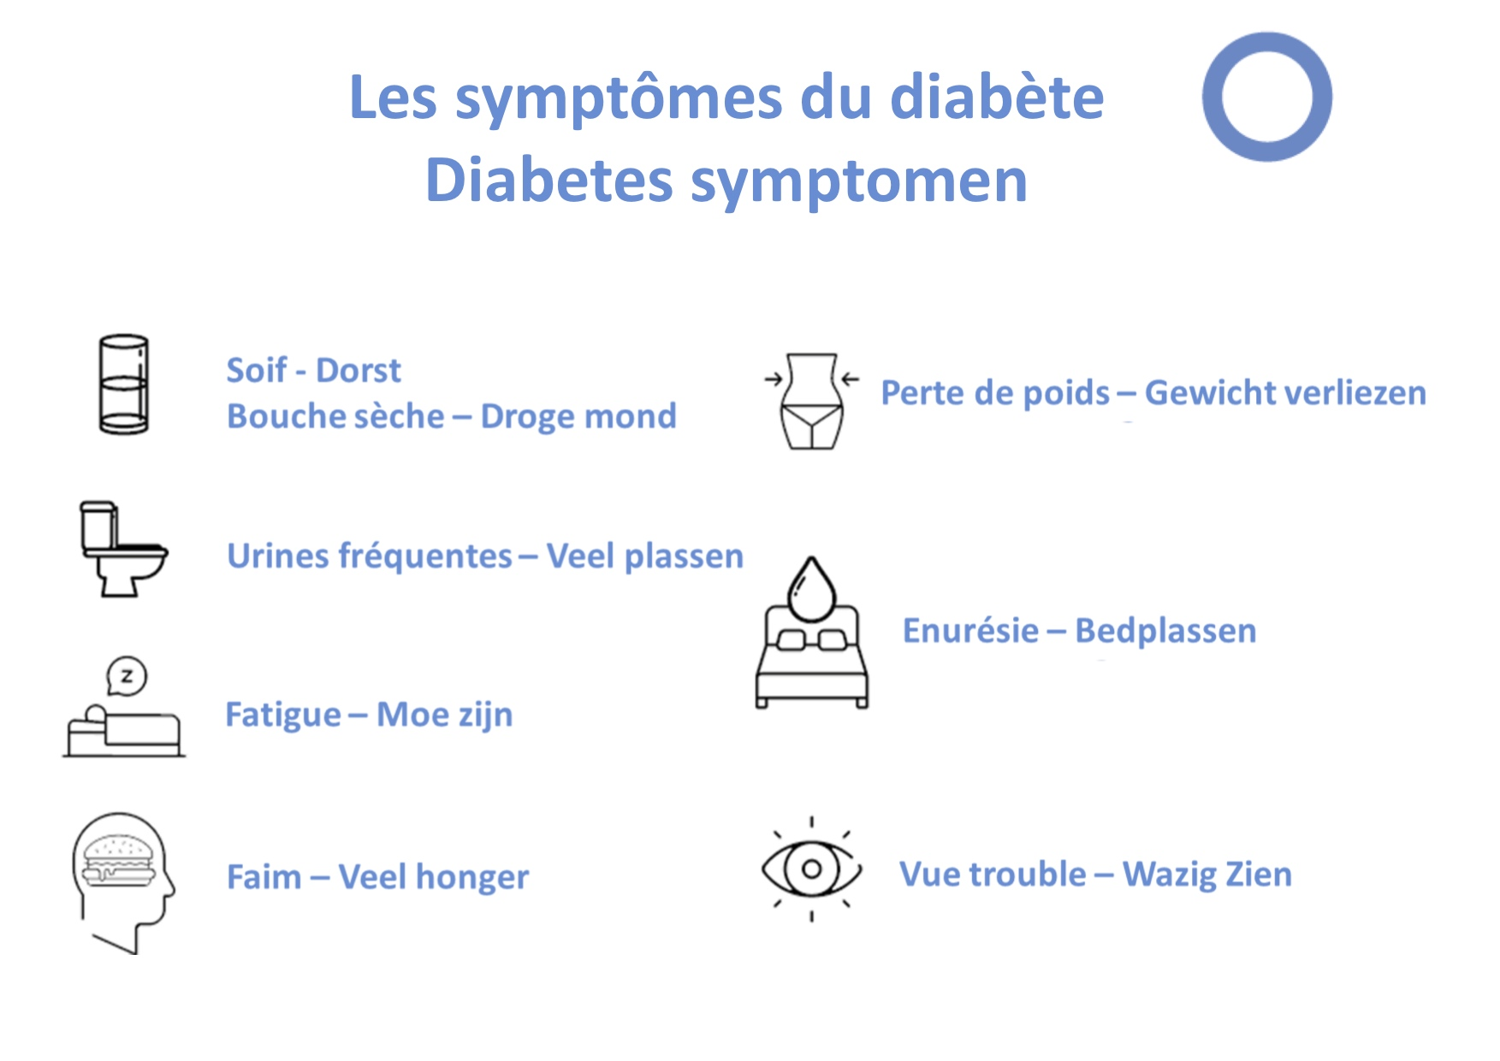 Diabetes symptomen
Bron: ABD